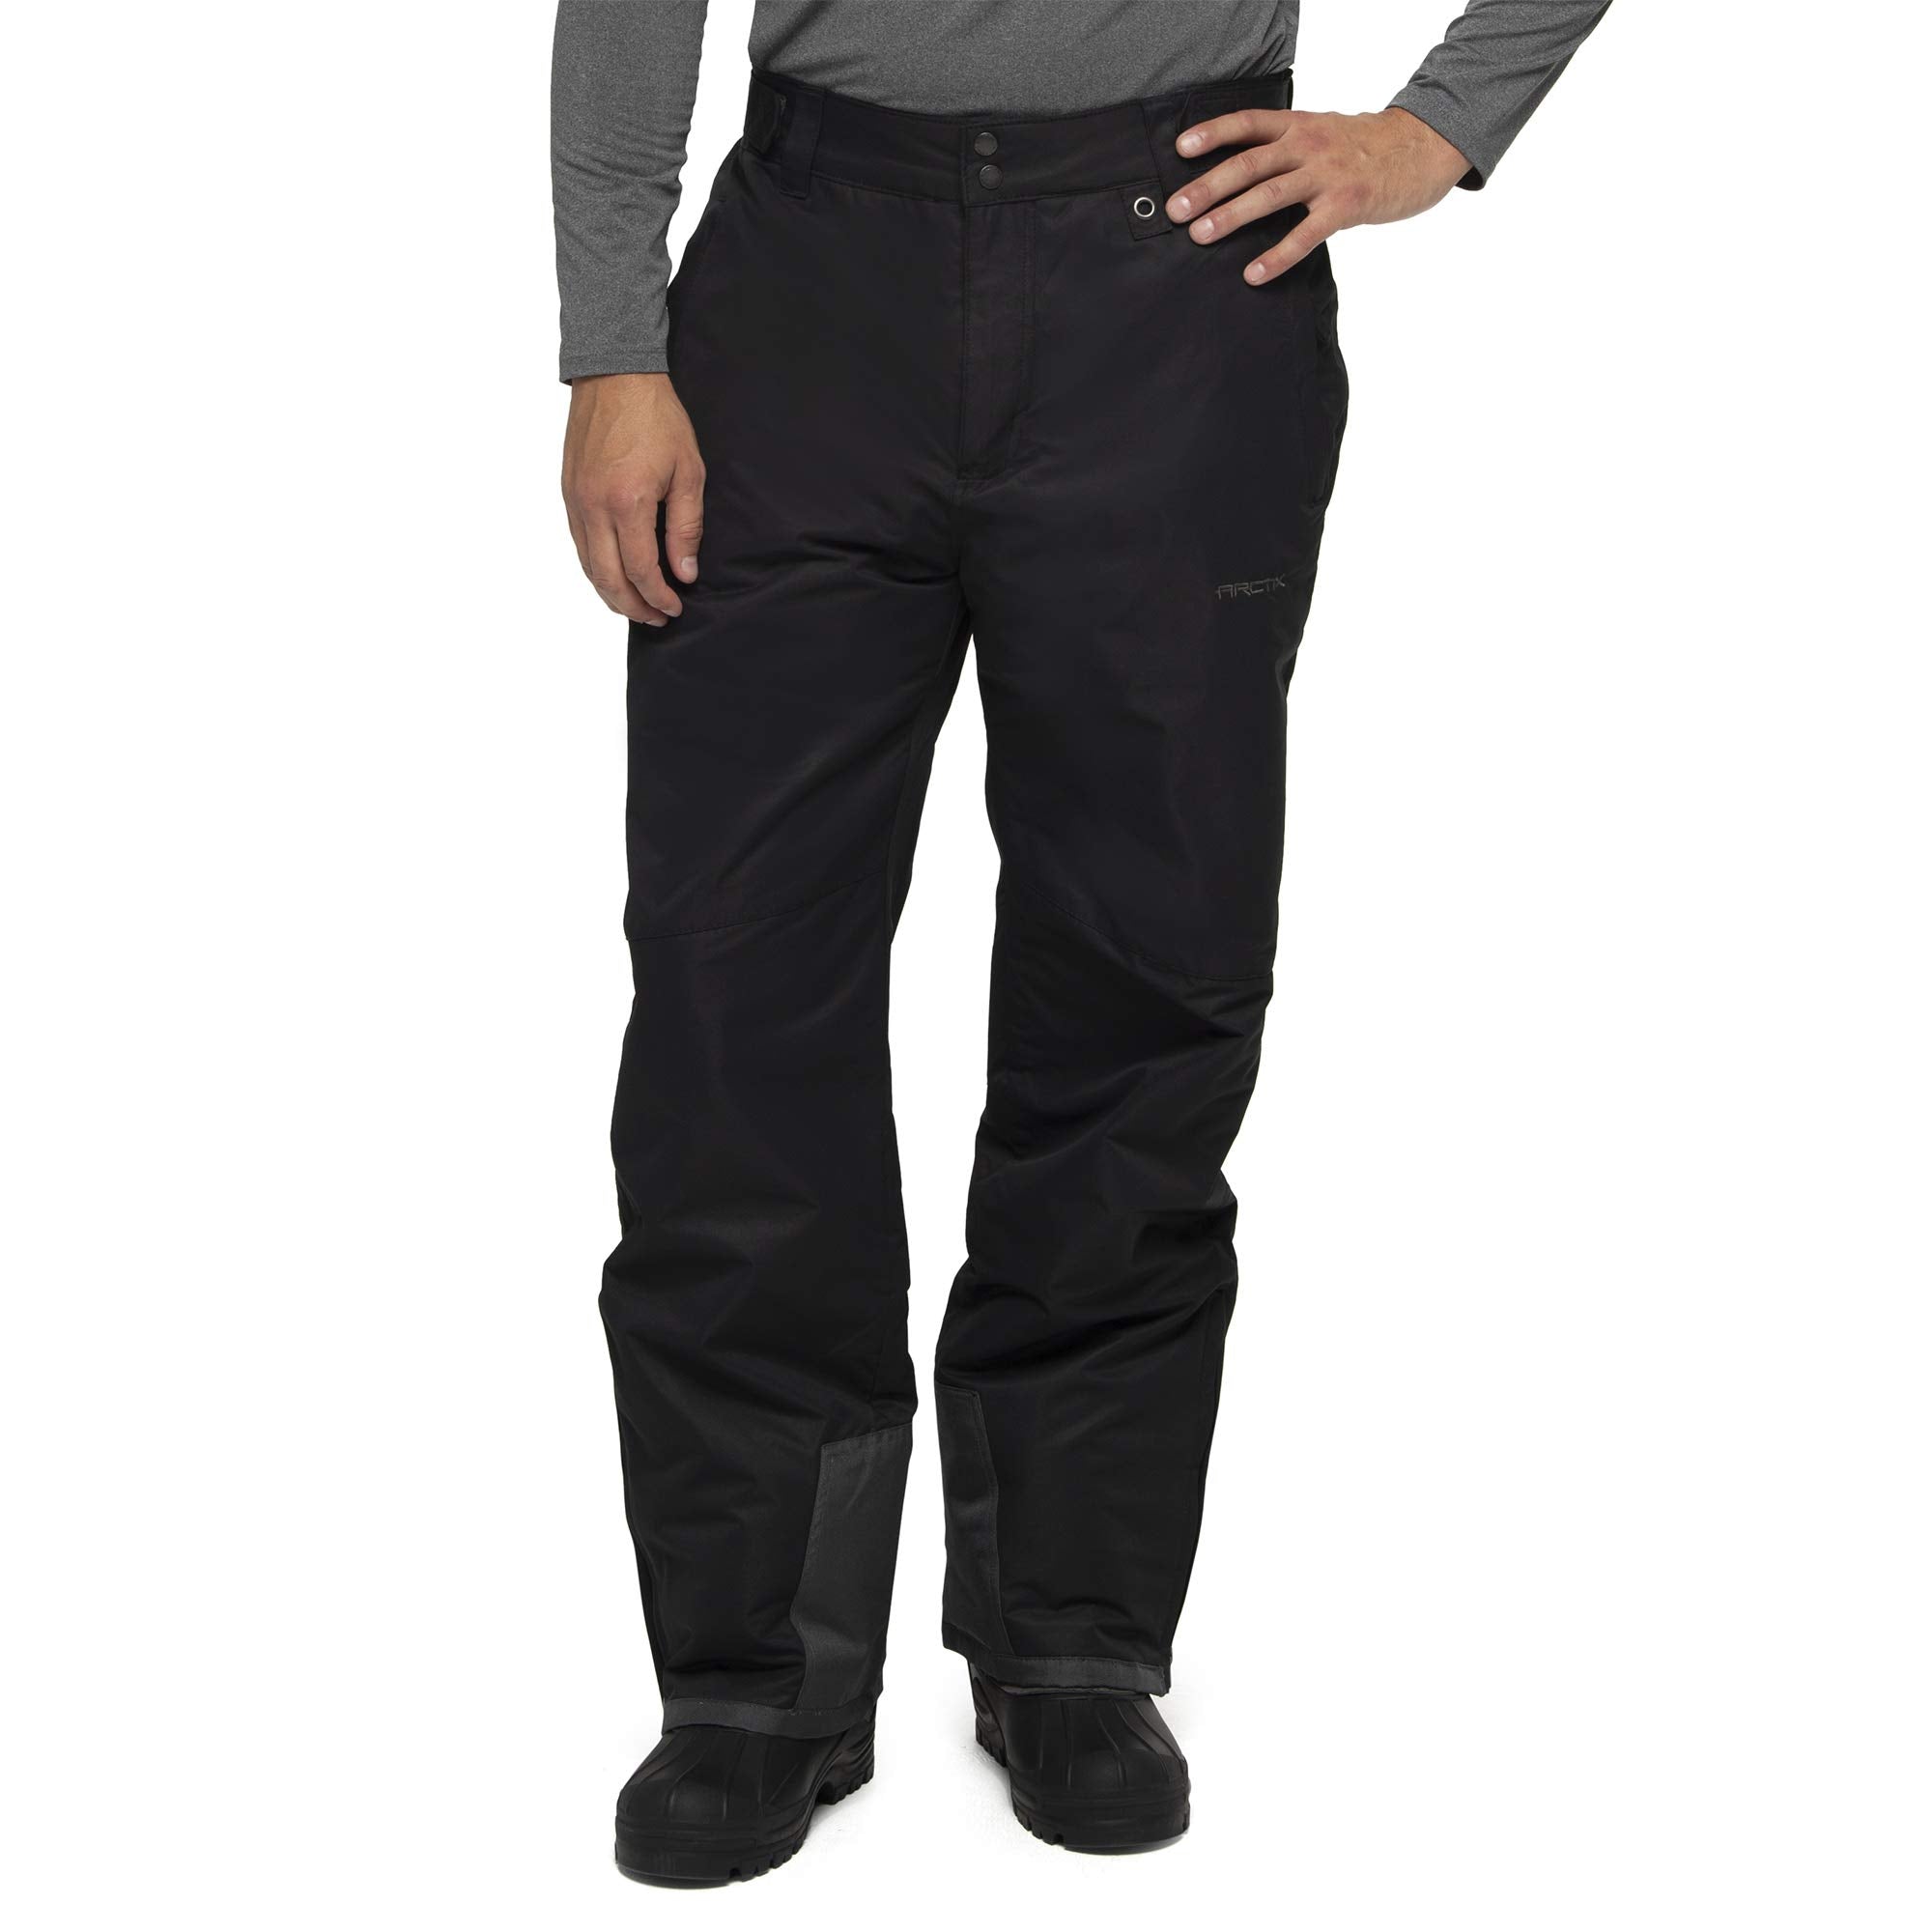 NEW - Arctix Sno Tex Insulated Winter Pants, Black, Men's Small